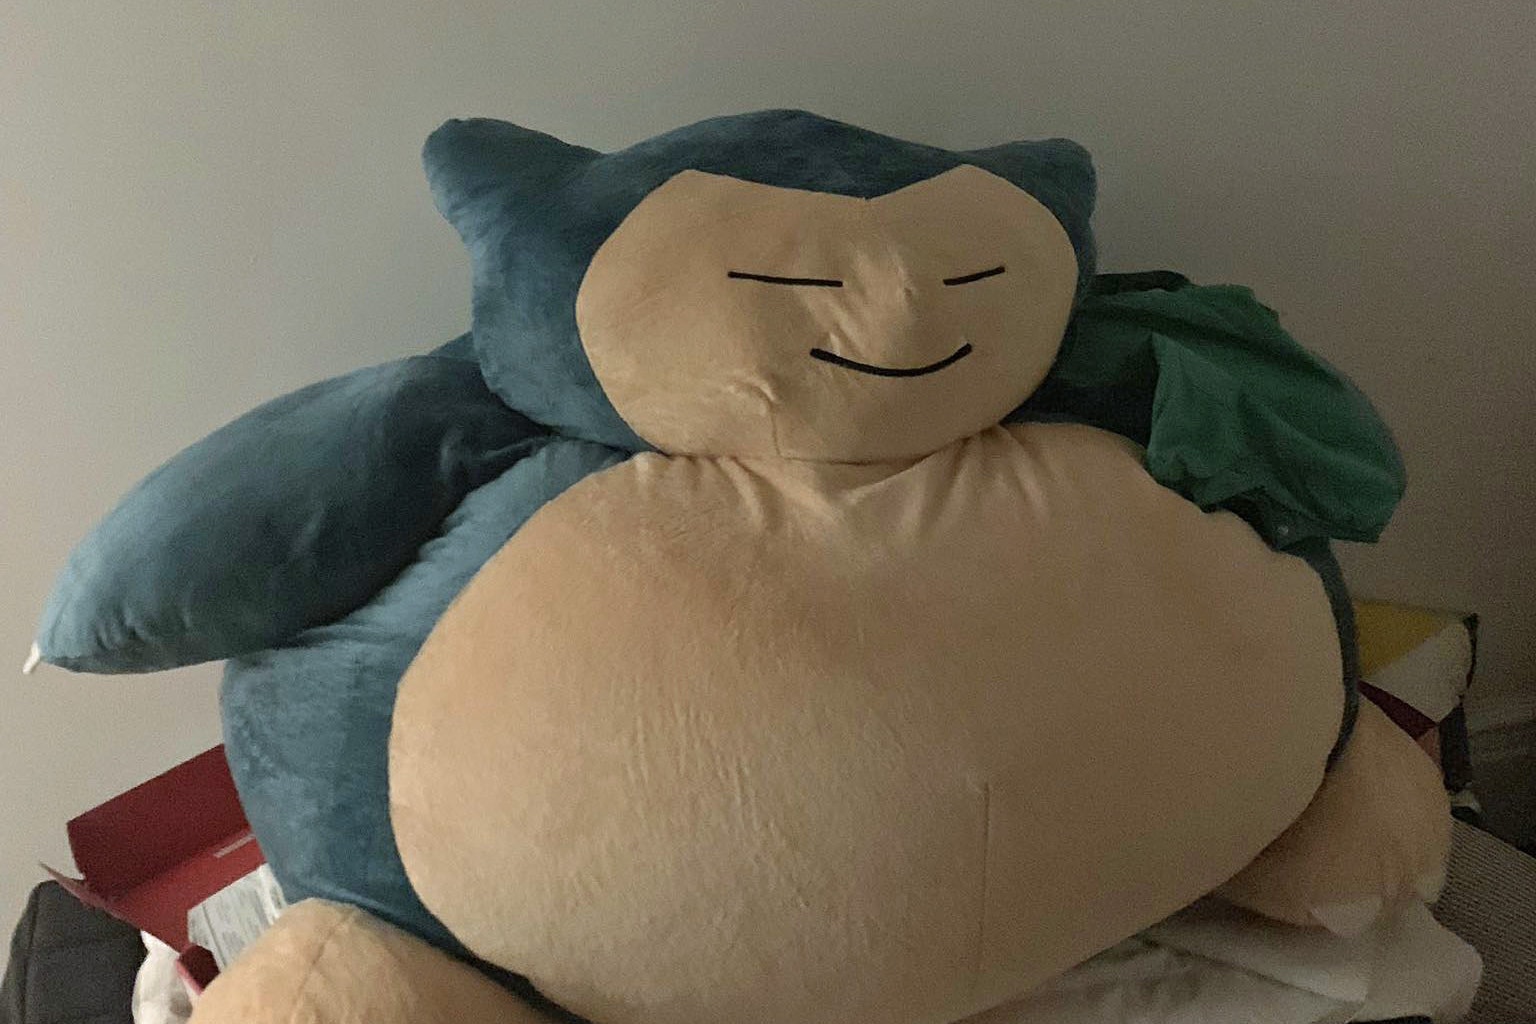 snorlax body pillow